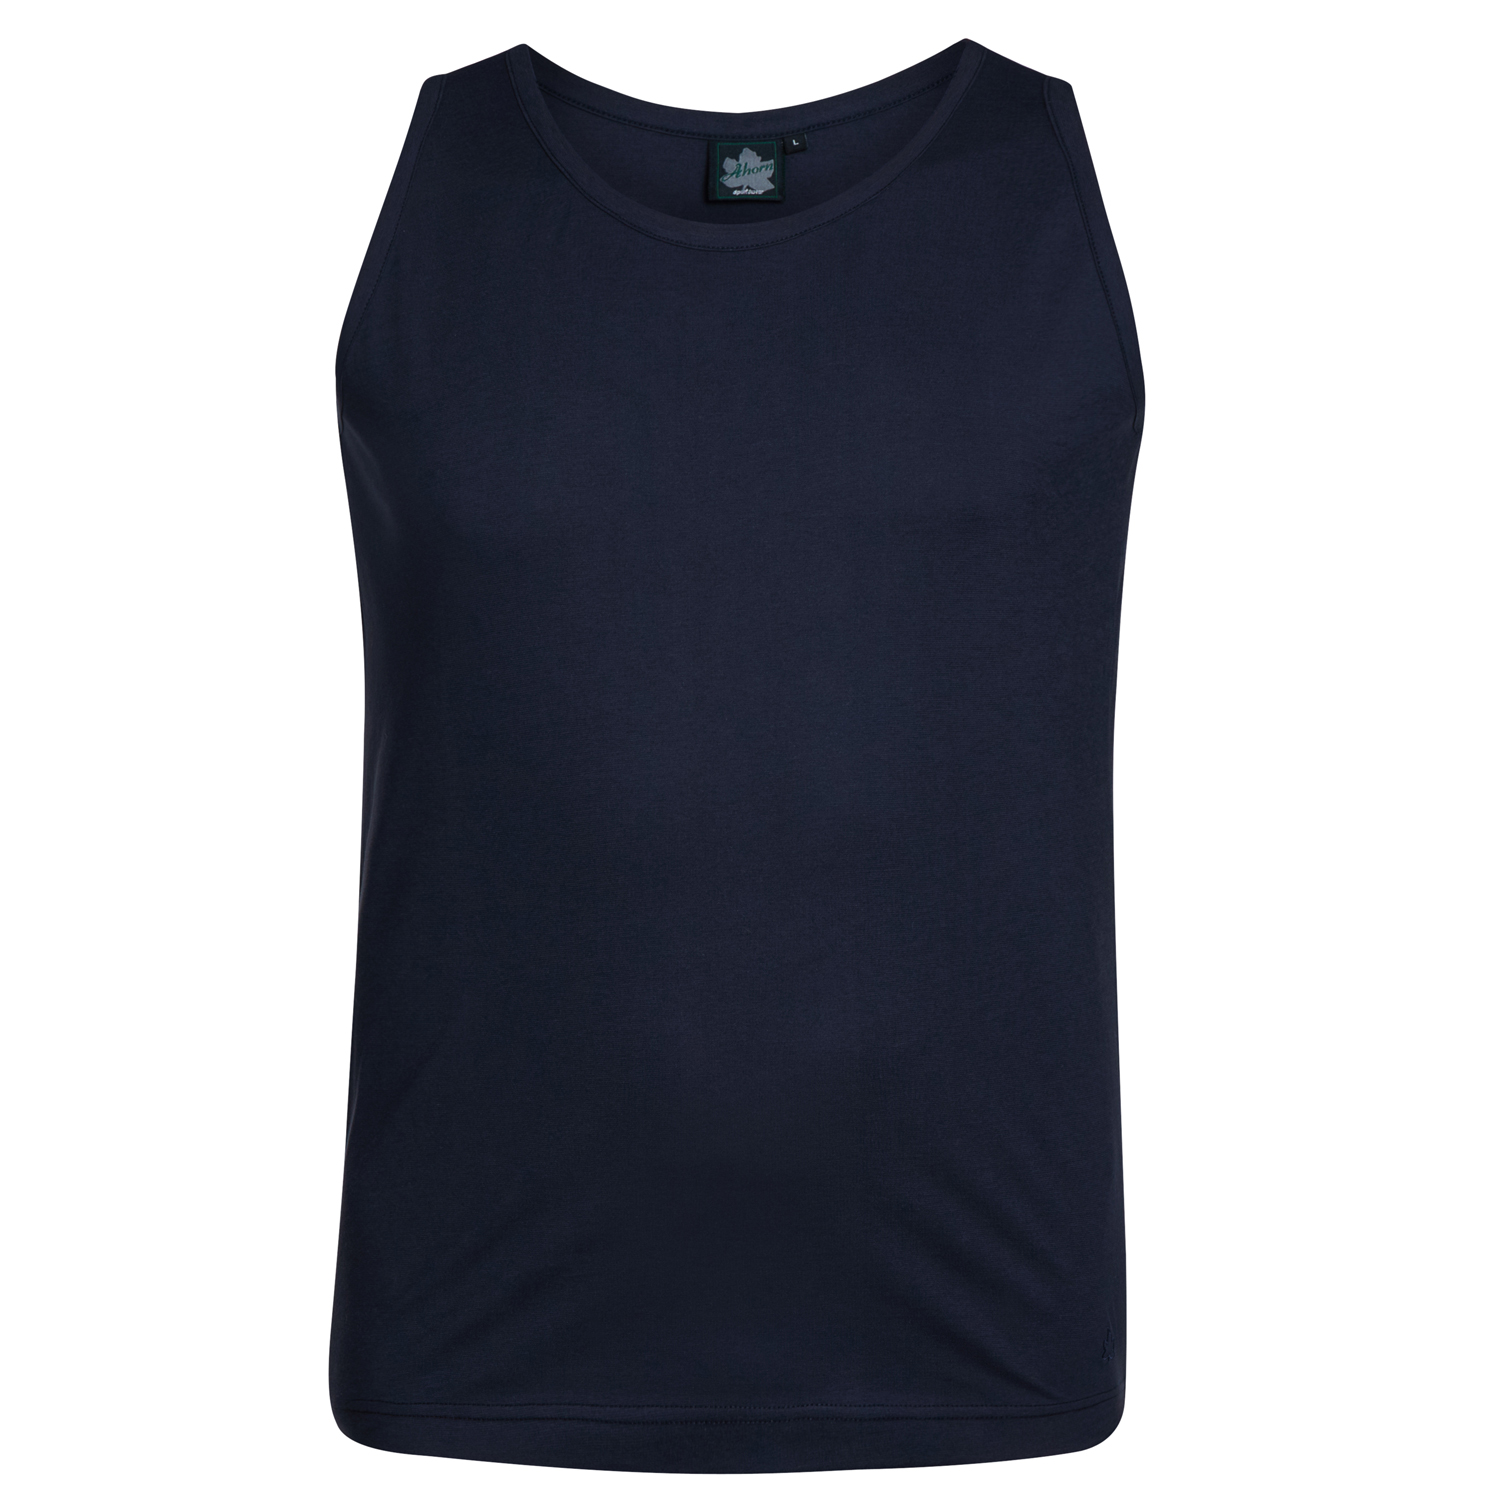 Shirt sans manches en bleu foncé by Ahorn Sportswear en grandes tailles 2XL - 10XL